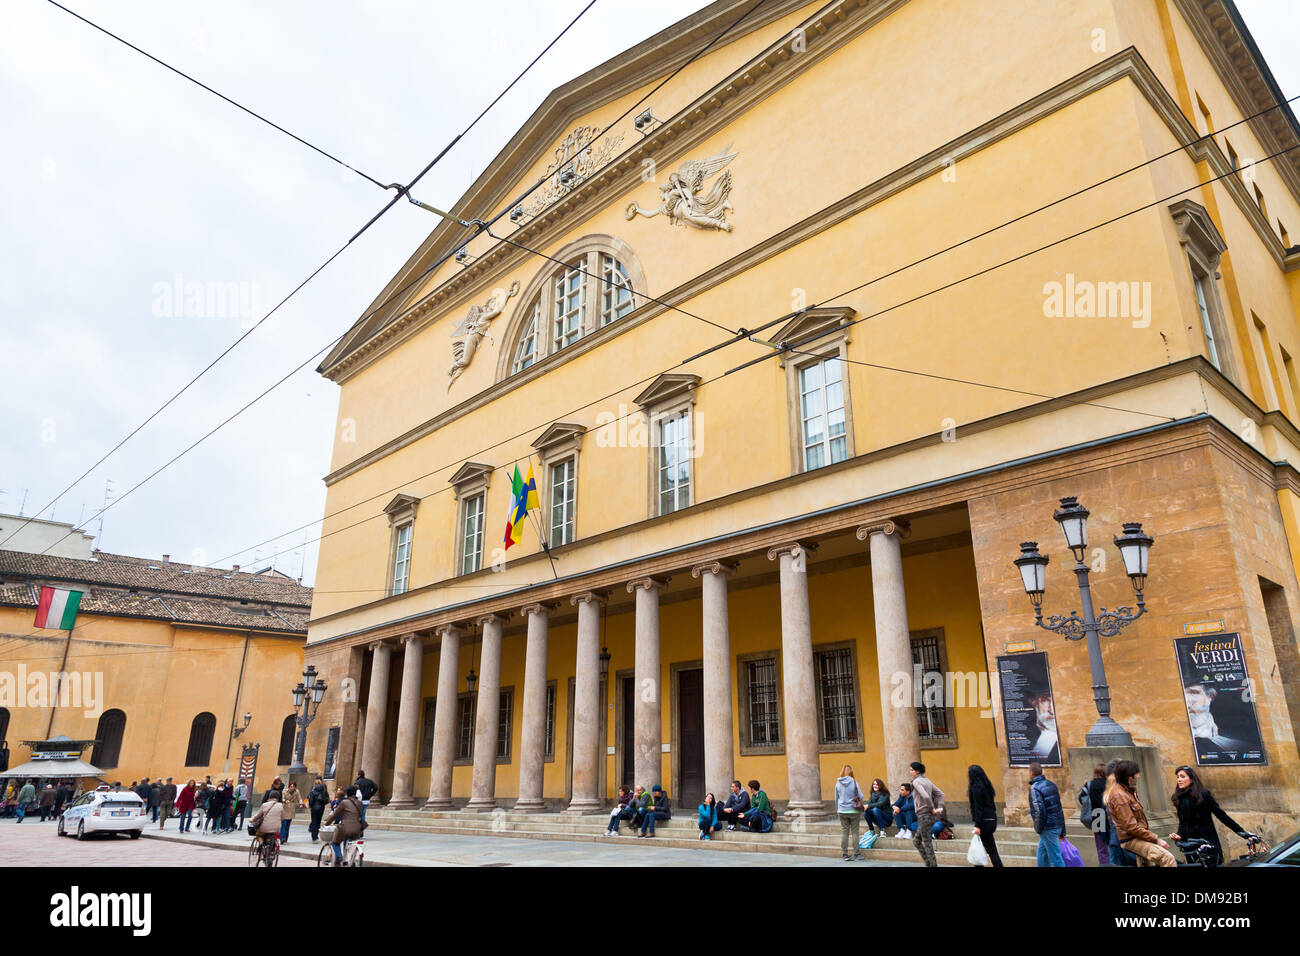 Teatro Regio di Parma - opera house in Parma, Italy Stock Photo